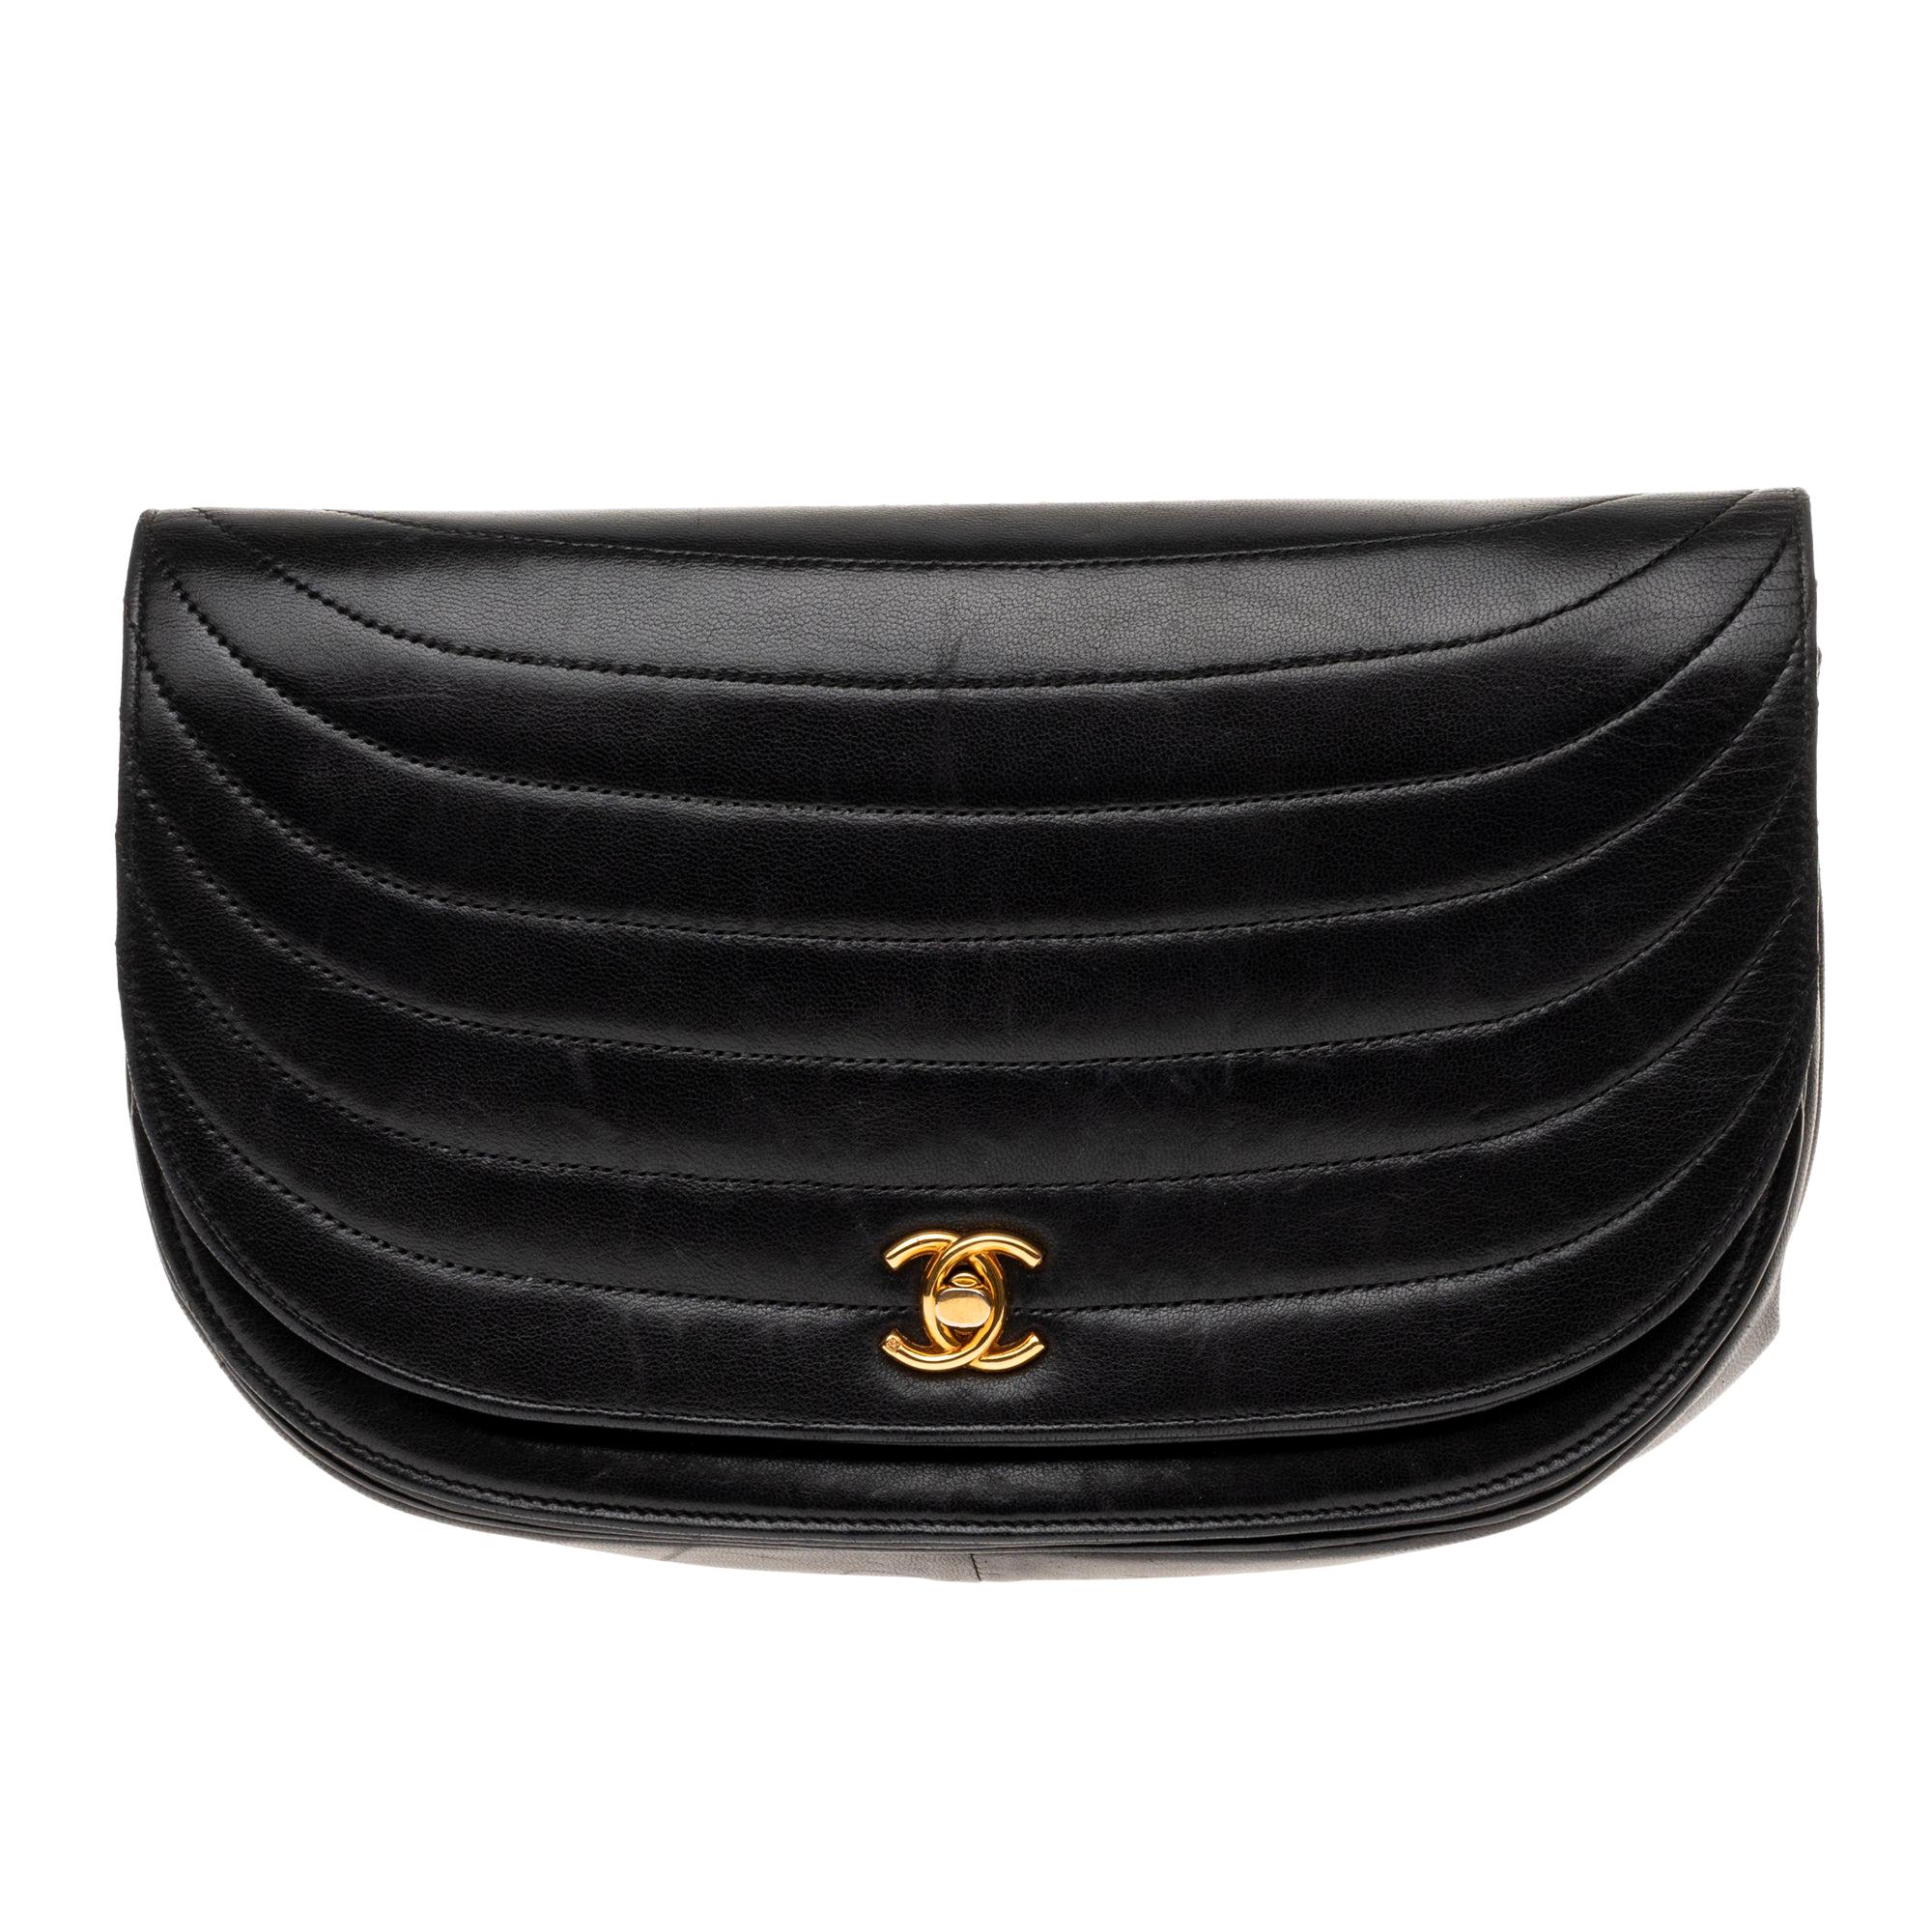 Rare Chanel handbag in waved black lambskin and gold hardware